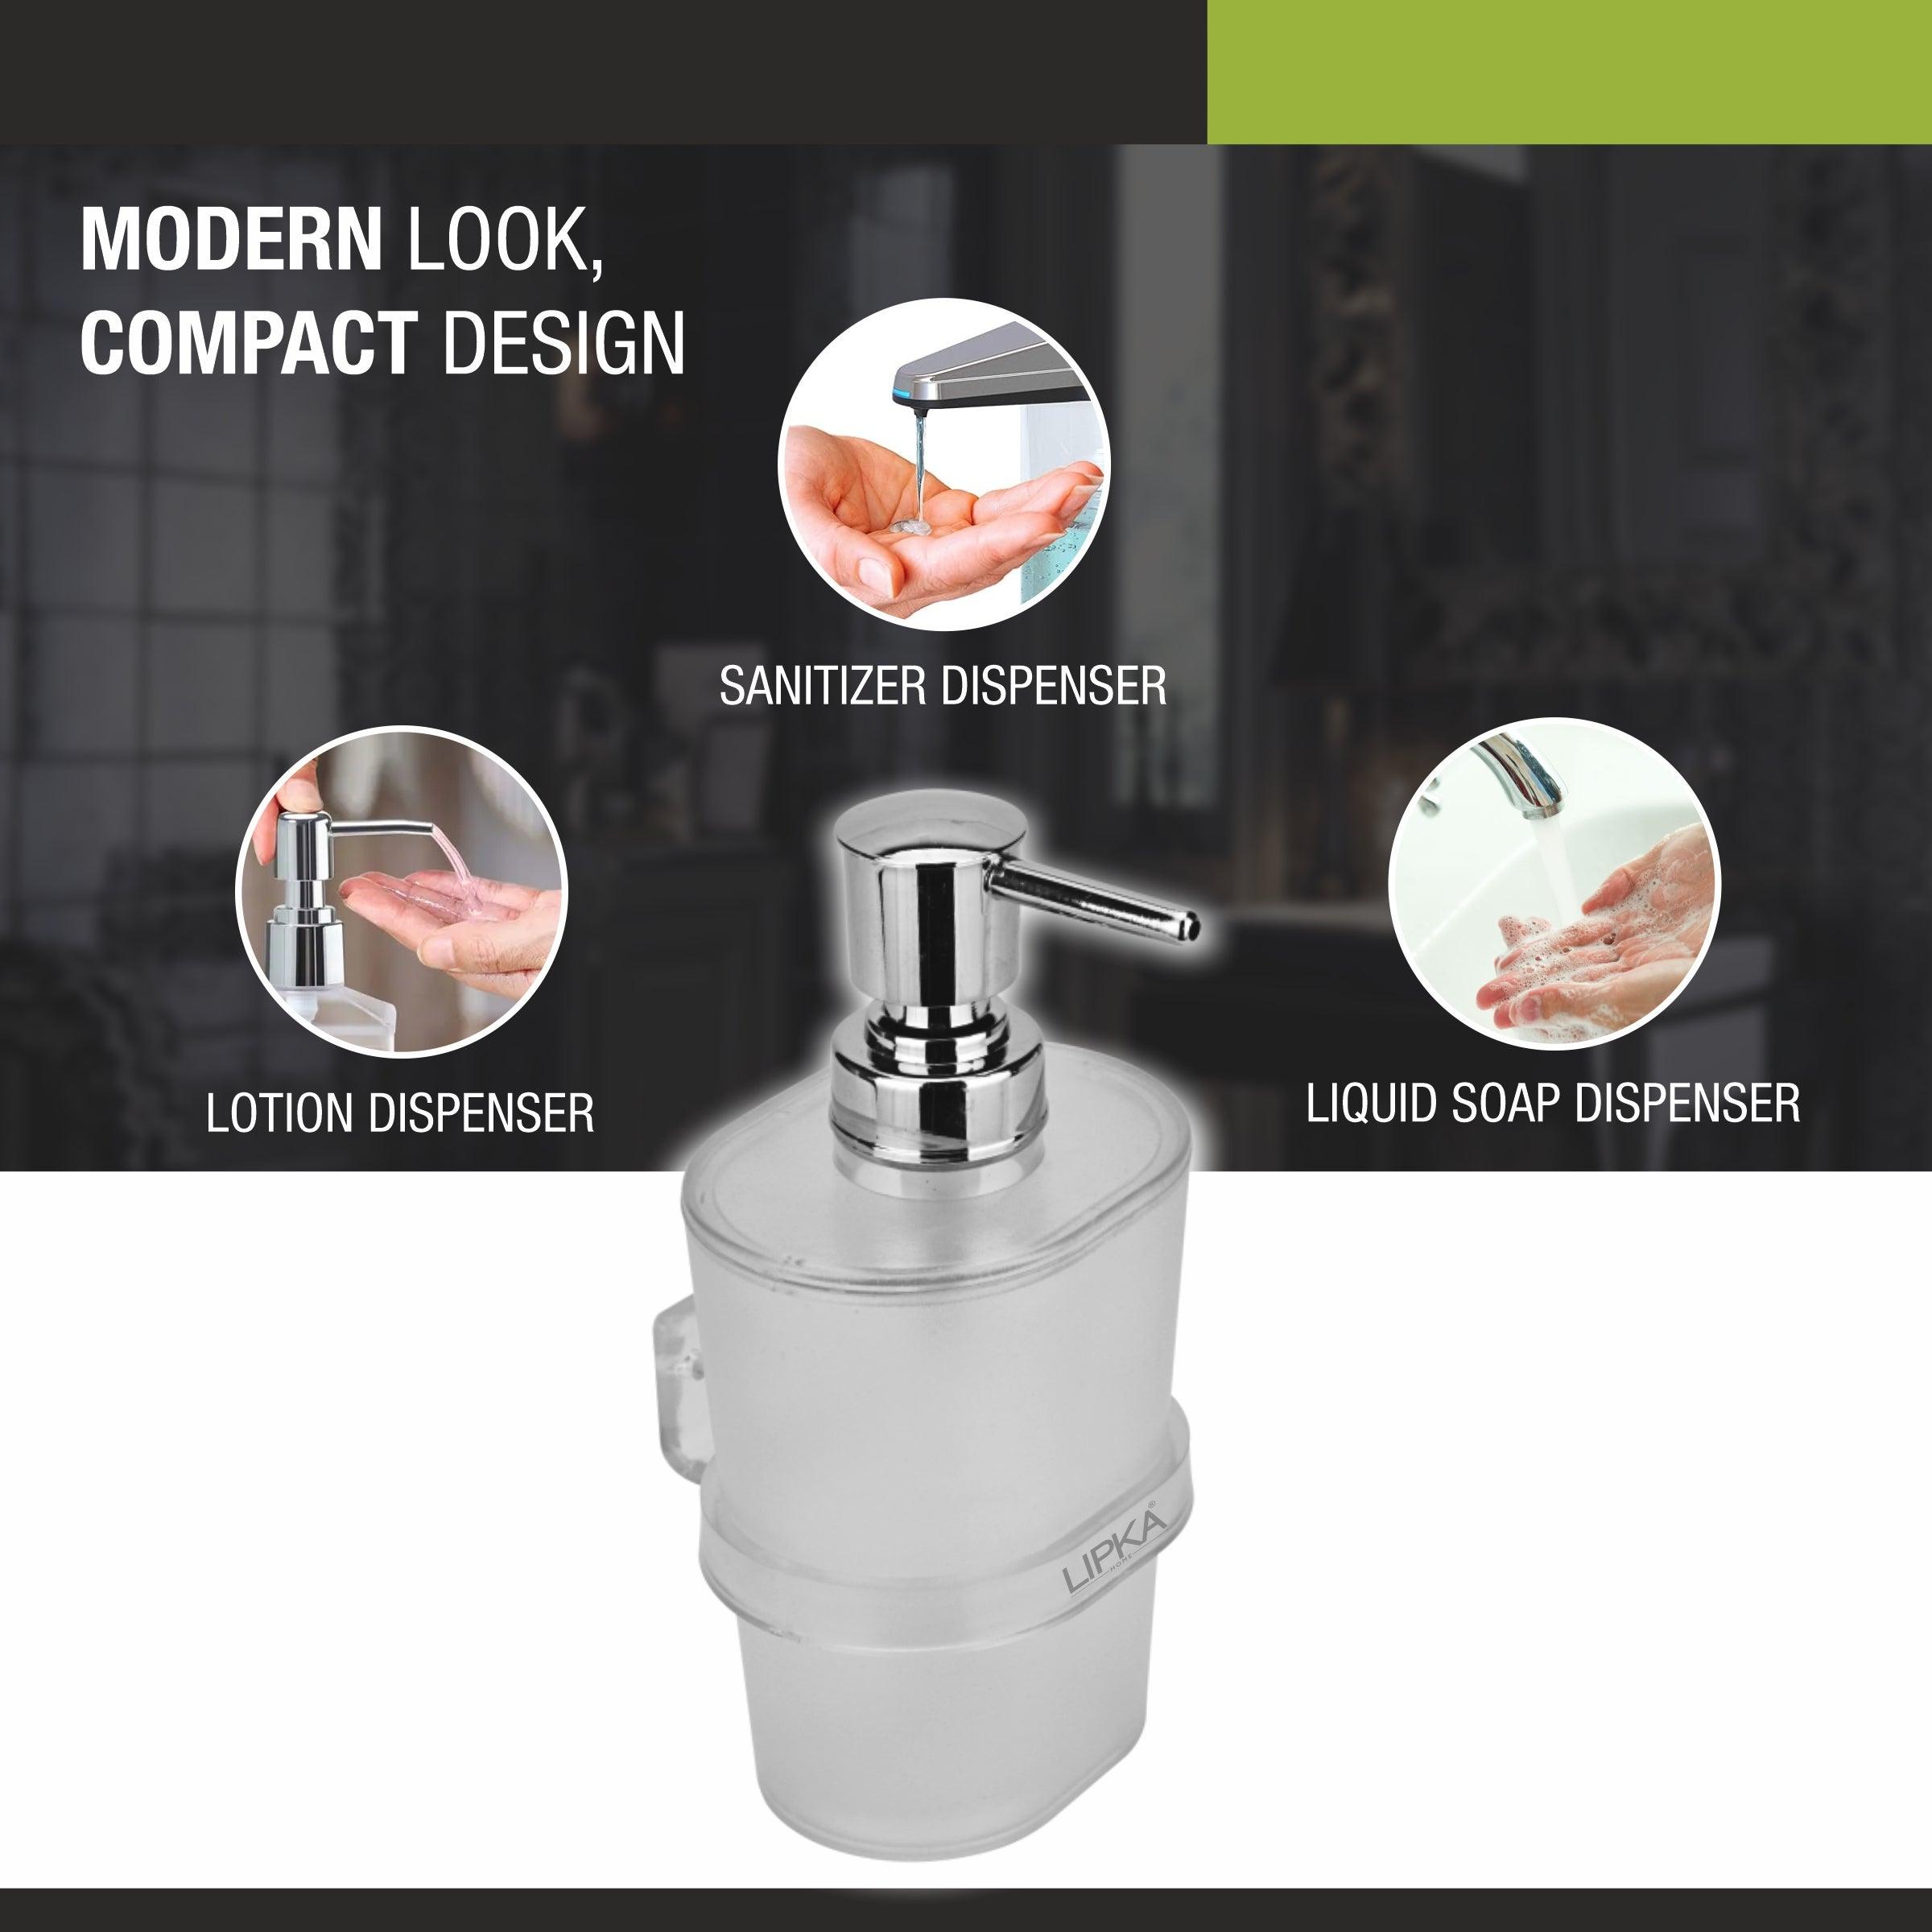 ABS Oval Liquid Soap Dispenser - LIPKA - Lipka Home